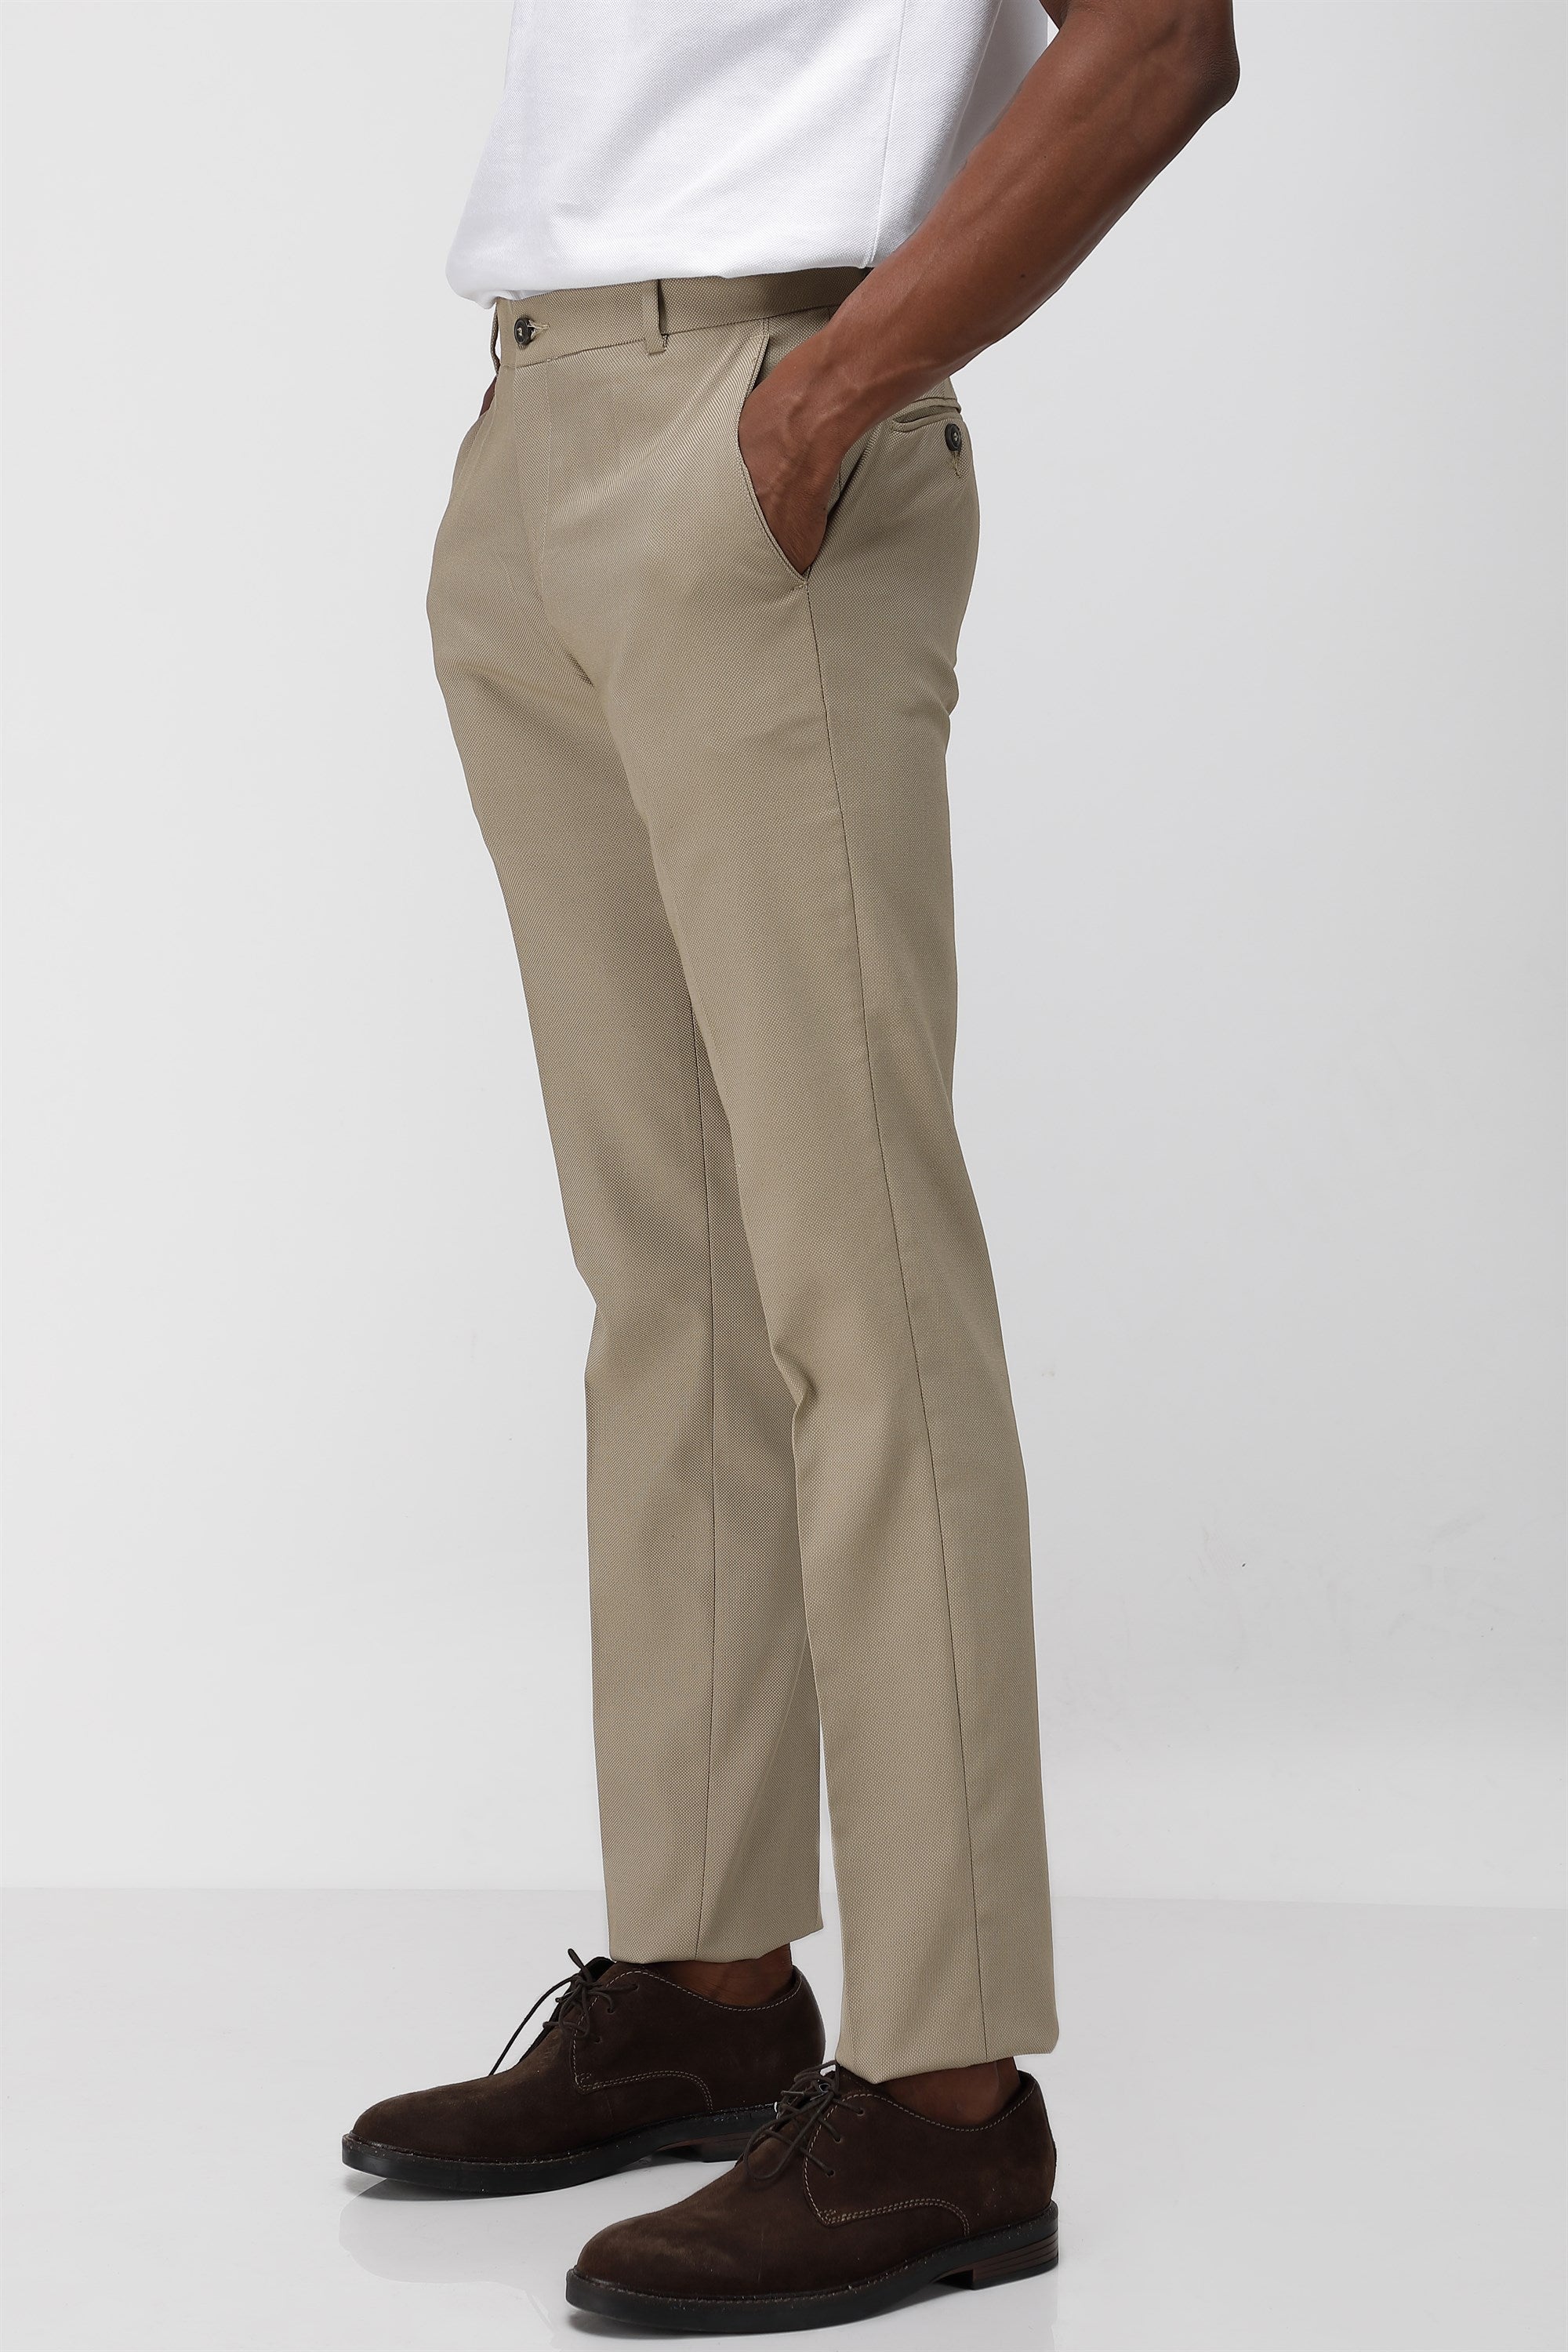 Buy KACHCHAP Men's Formal Pant Stretchable (28, Beige, Cotton Lycra) at  Amazon.in